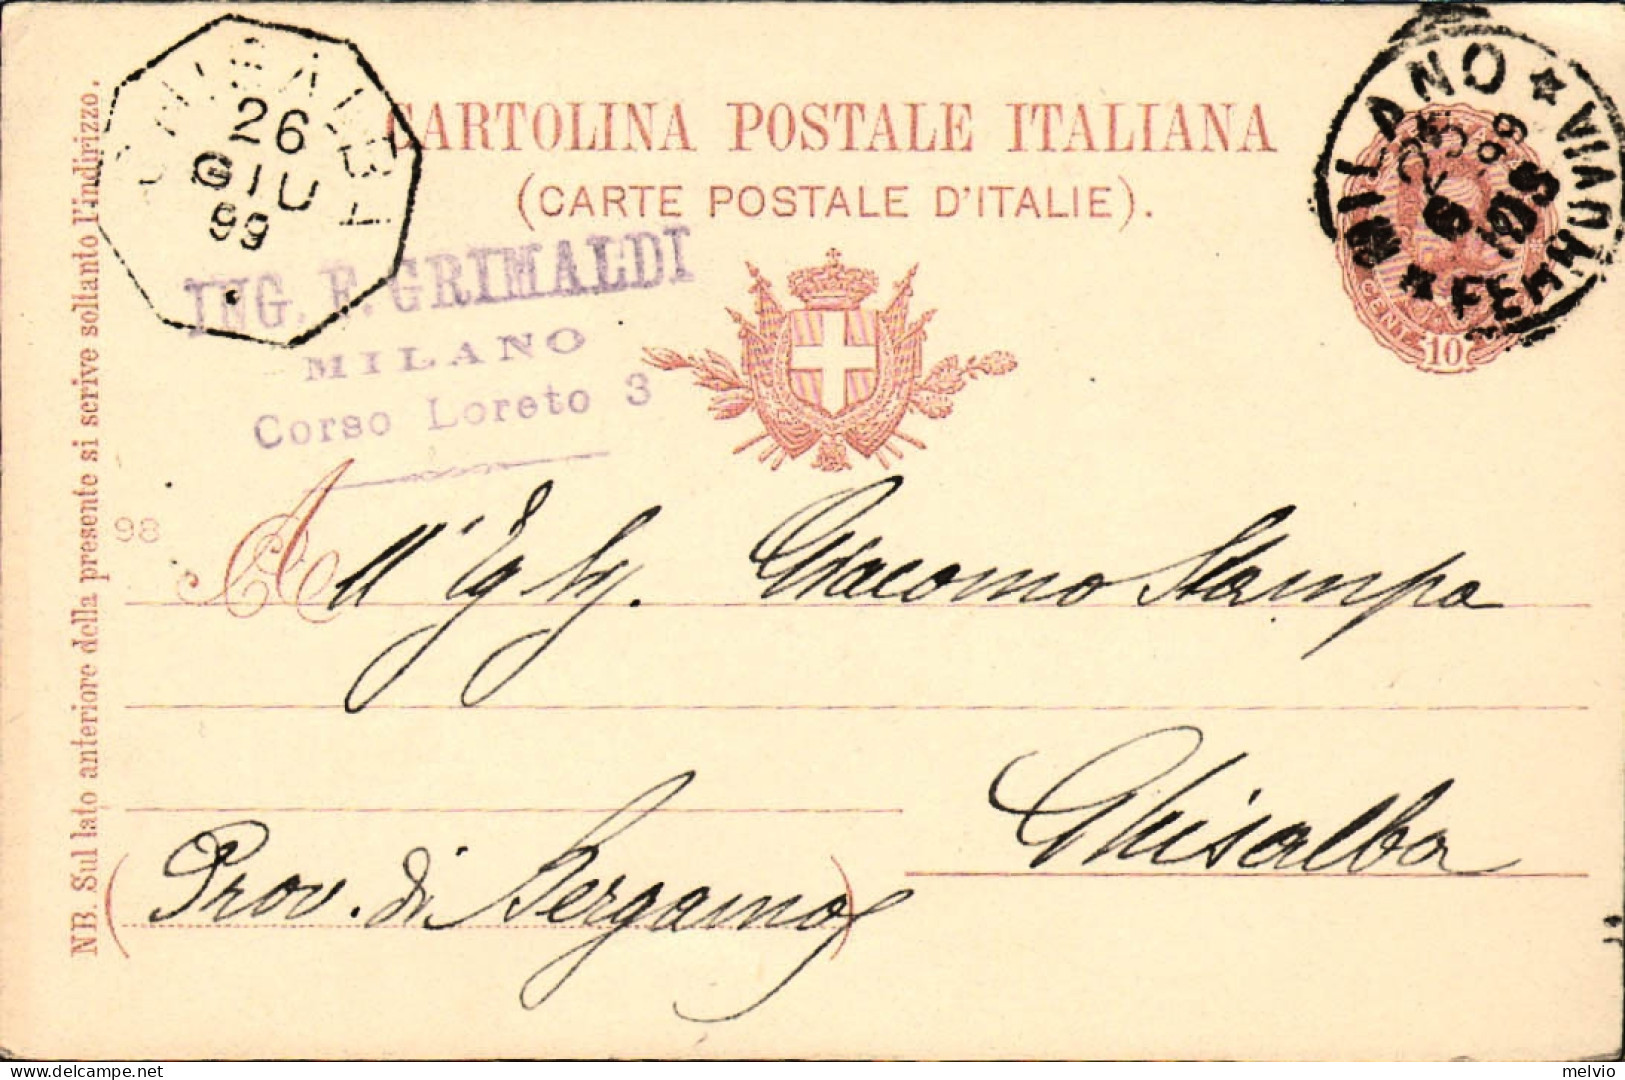 1899-cartolina Postale 10c.Umberto I Con Annullo Ottagonale In Arrivo Di Ghisalb - Stamped Stationery